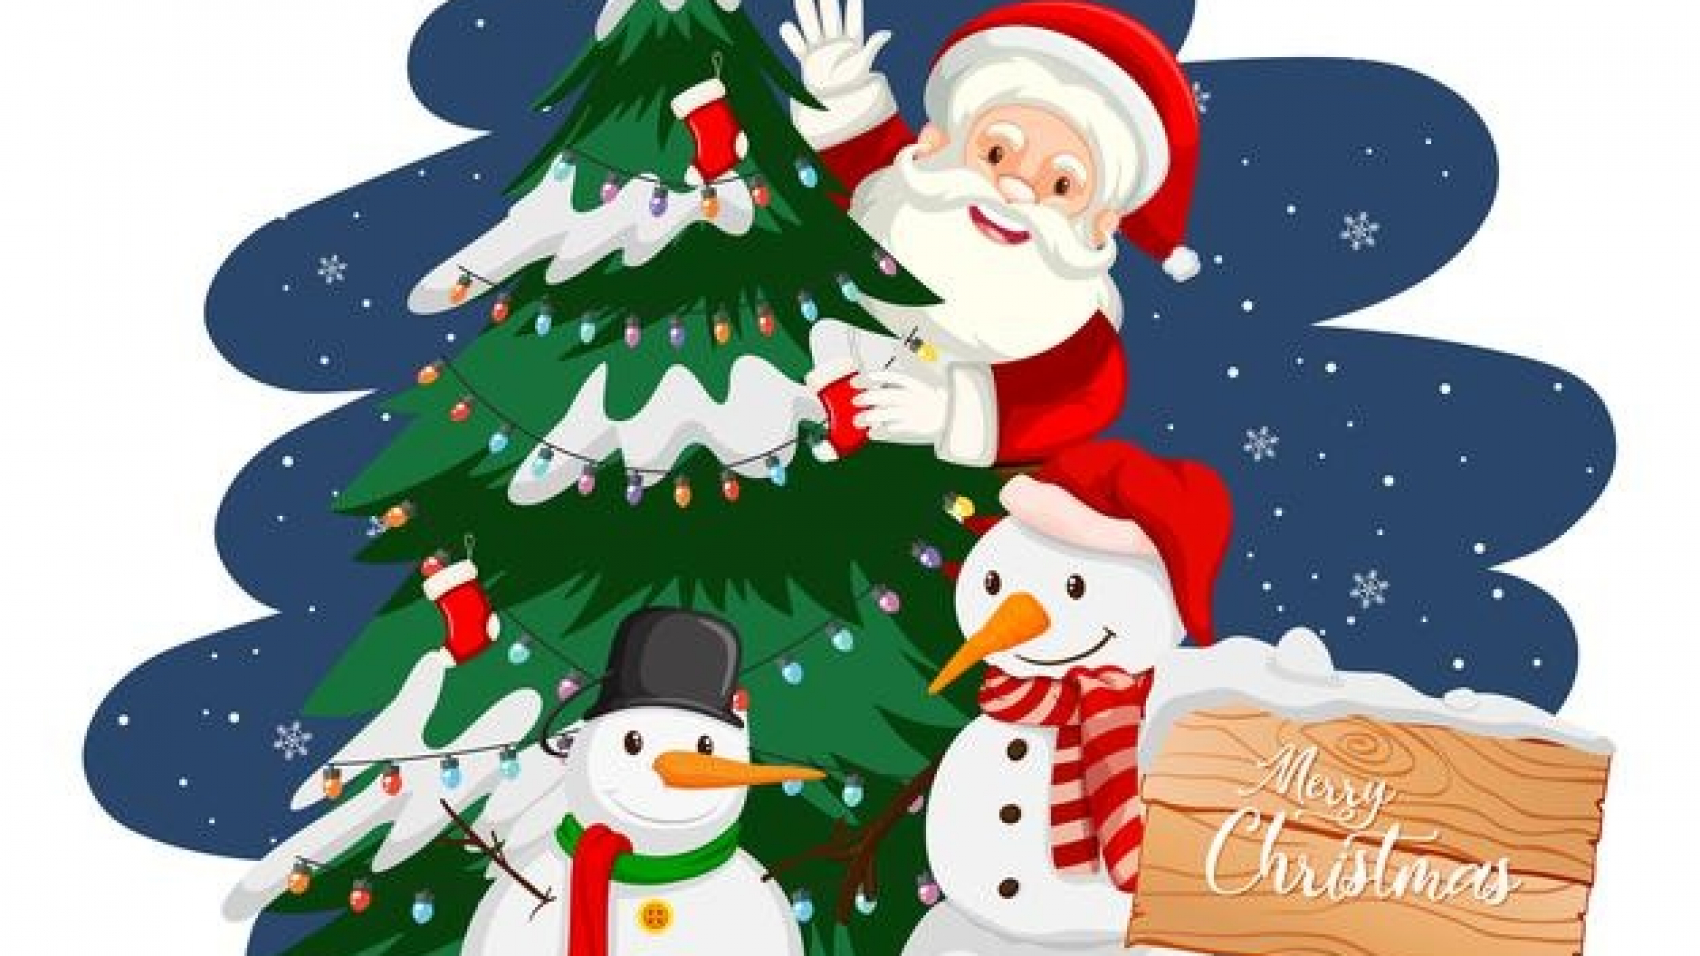 santa-claus-with-christmas-tree-and-snowman-at-night_1308-53966